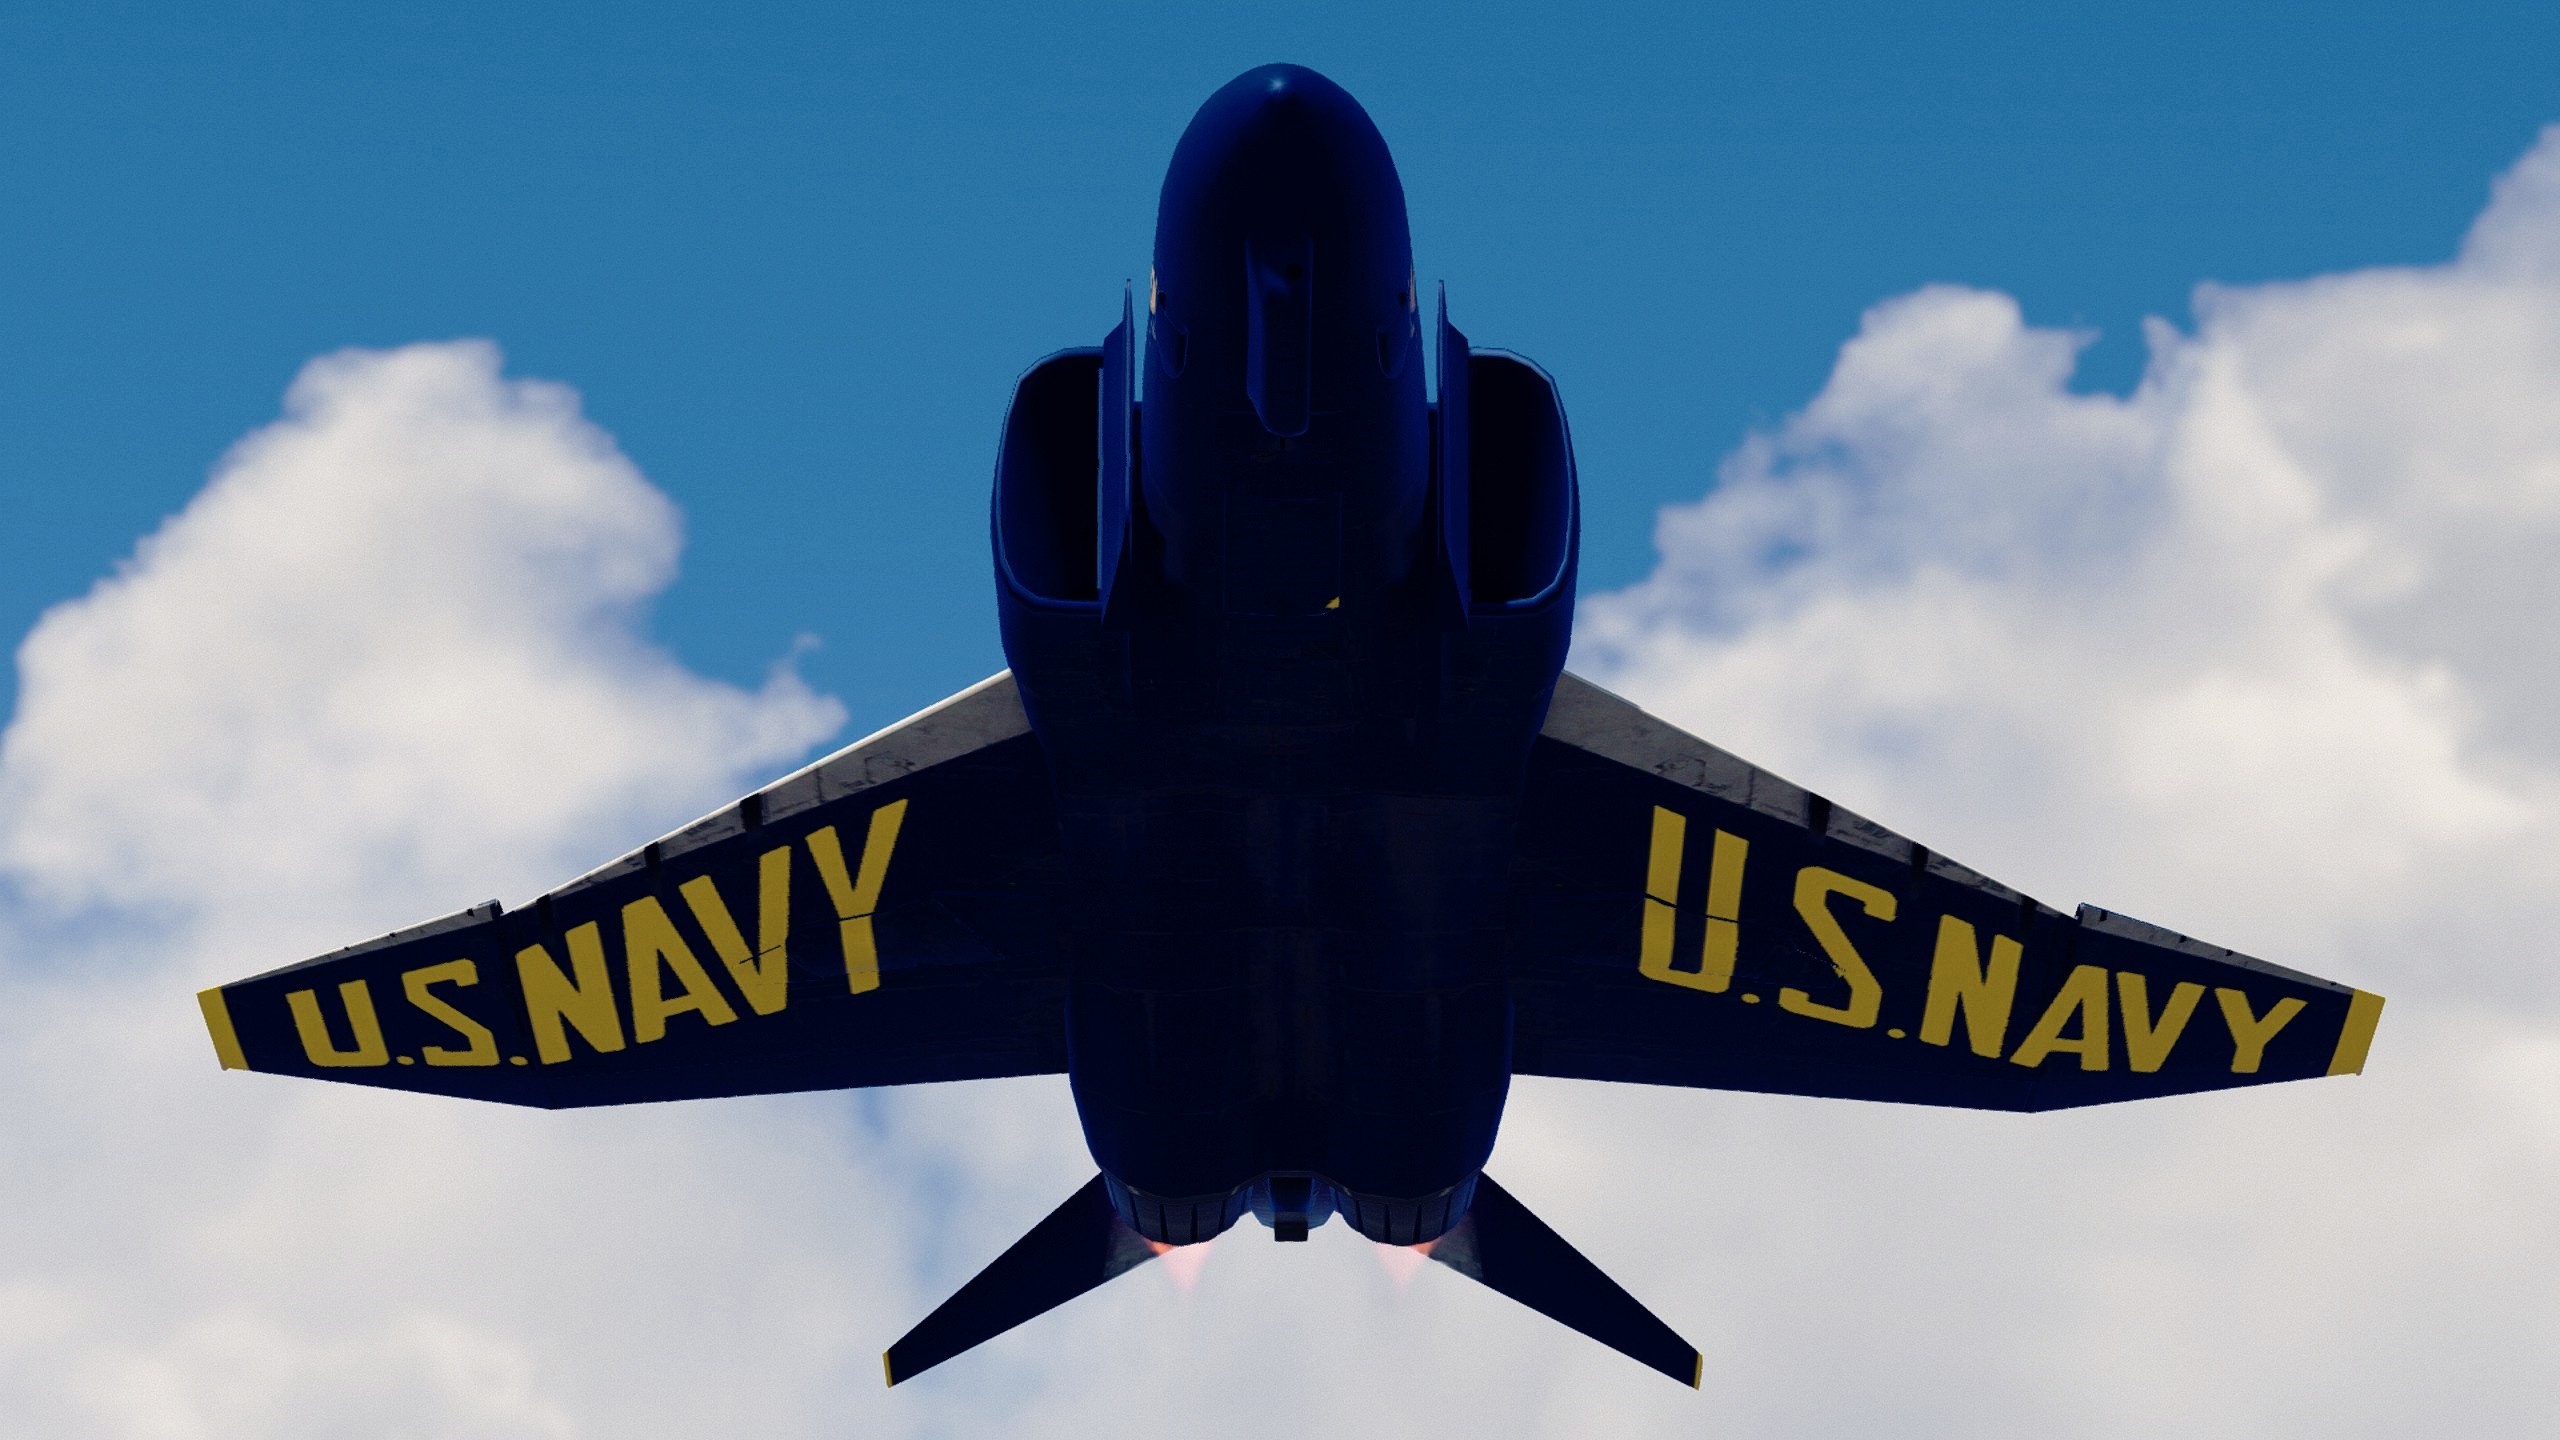 2560x1440 F-4 Phantom II Blue Angels US Navy Display Team [Add-on]